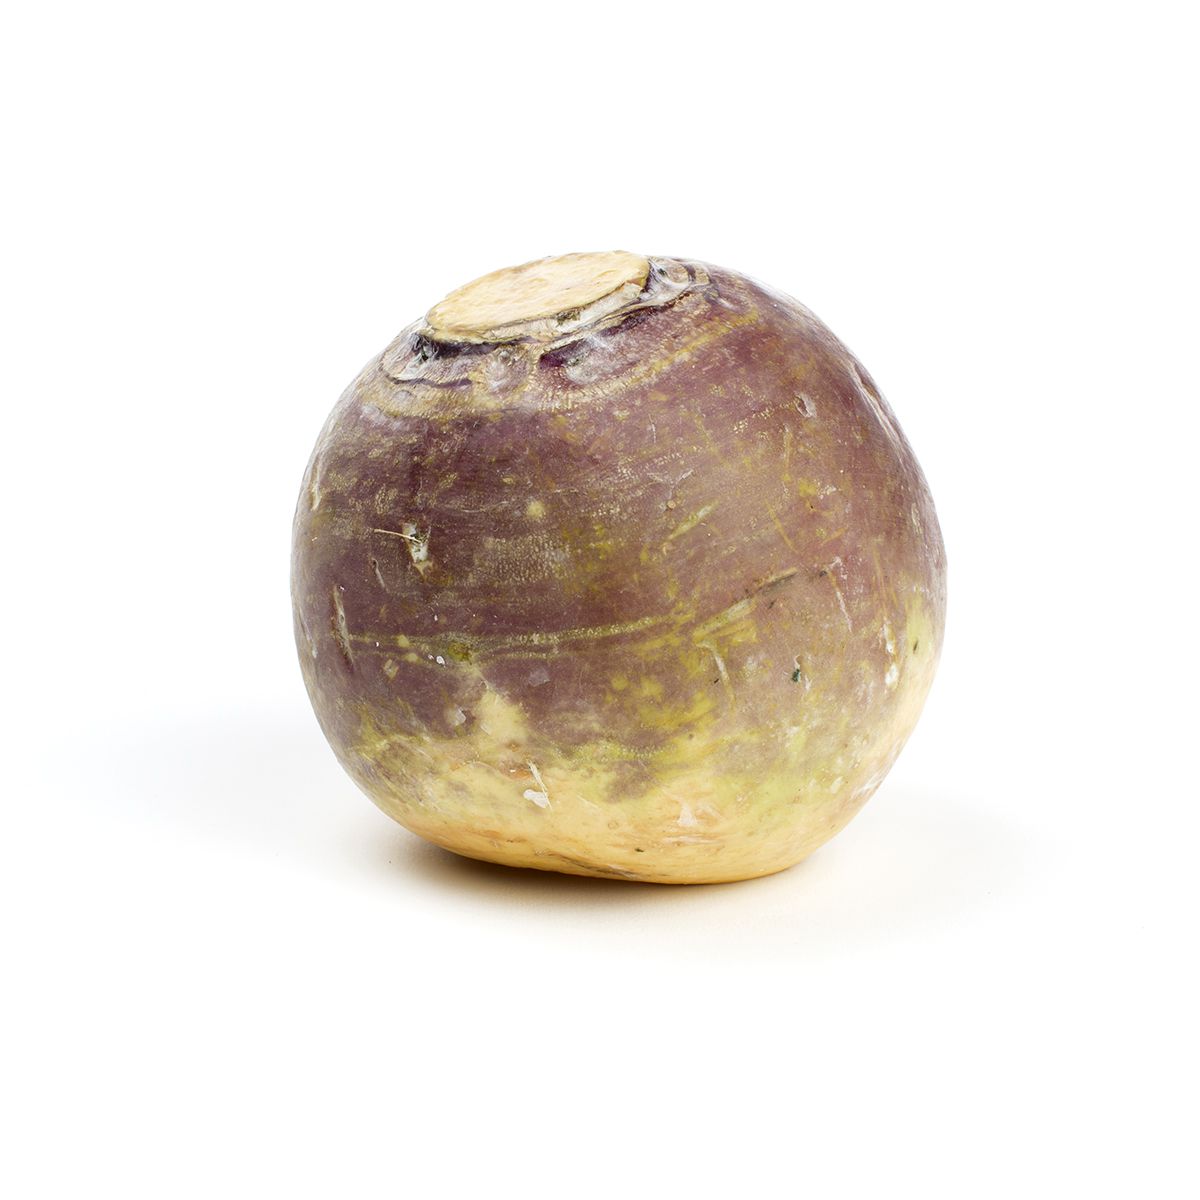 BoxNCase Rutabaga / Yellow Turnips